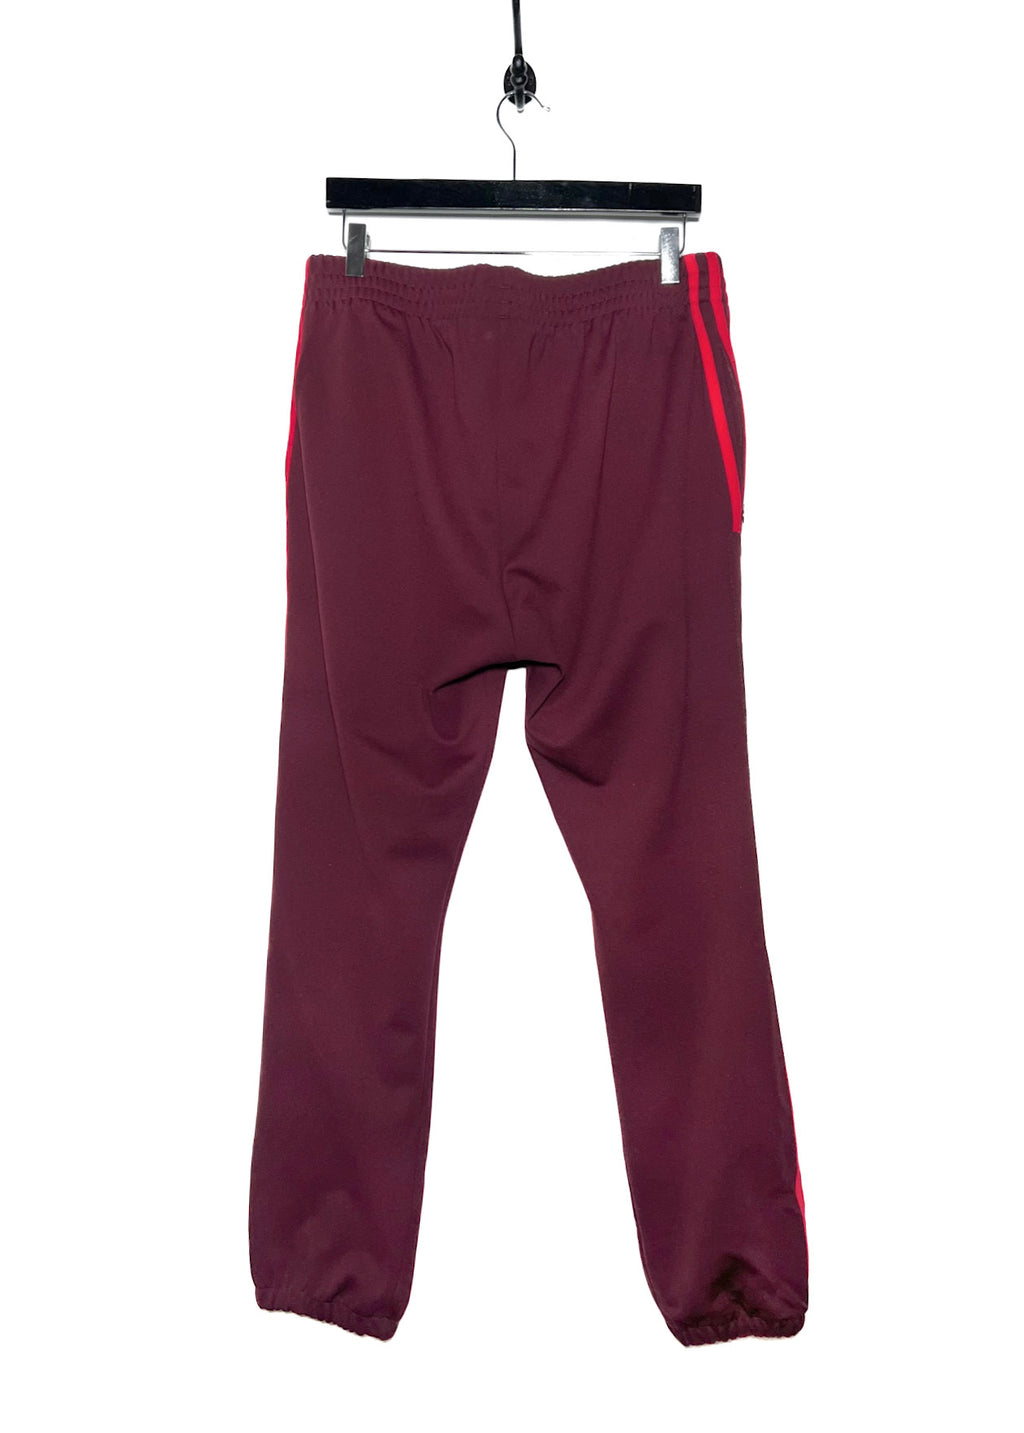 Pantalon de survêtement Adidas bordeaux Calabasas Logo avec rayures